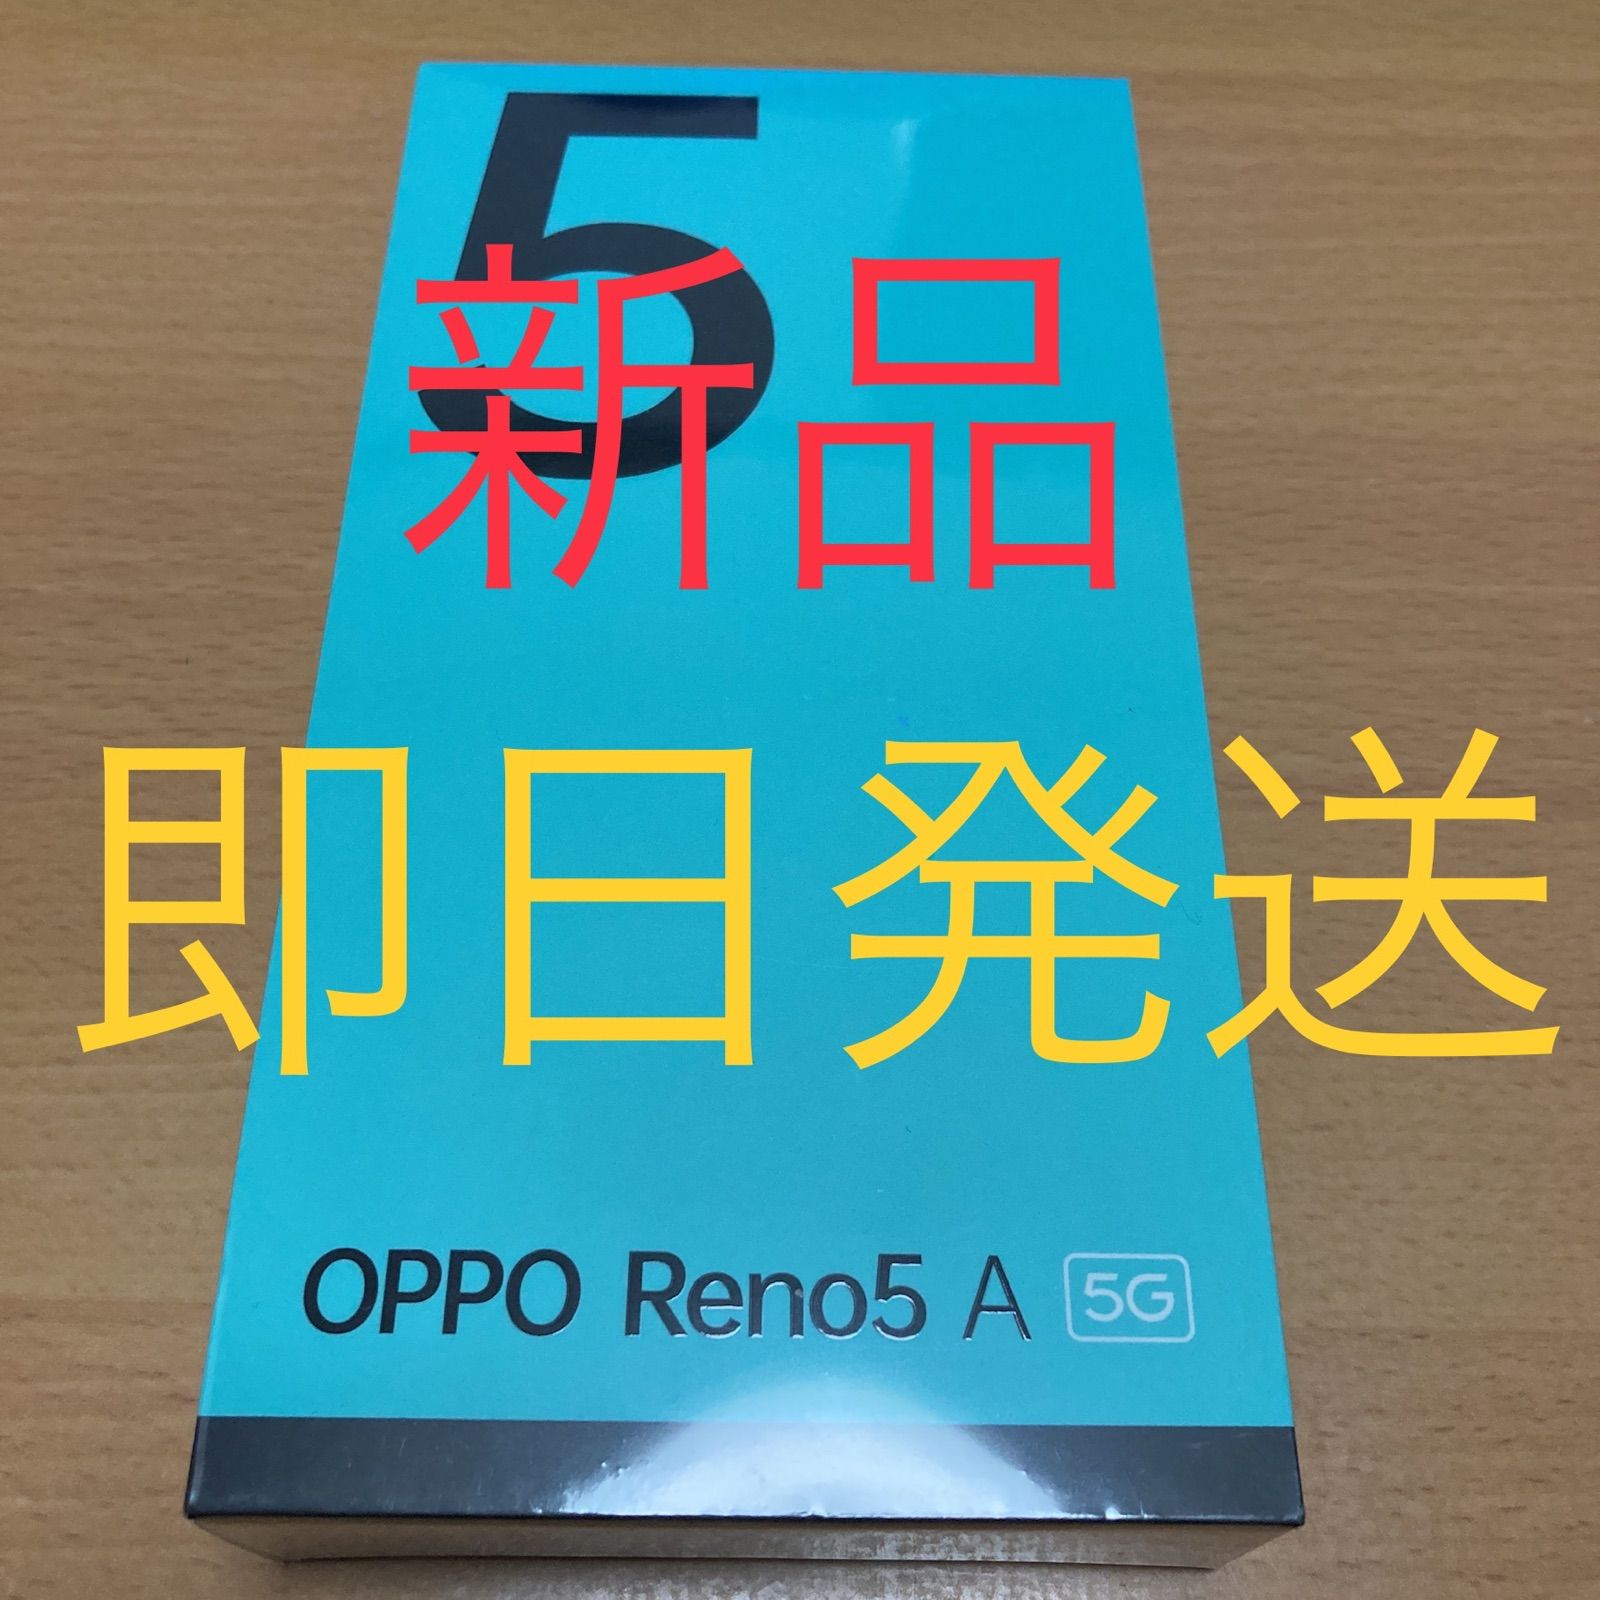 OPPO Reno5 A 5G simフリー 新品未開封 未使用品 - スーパーチョロリ